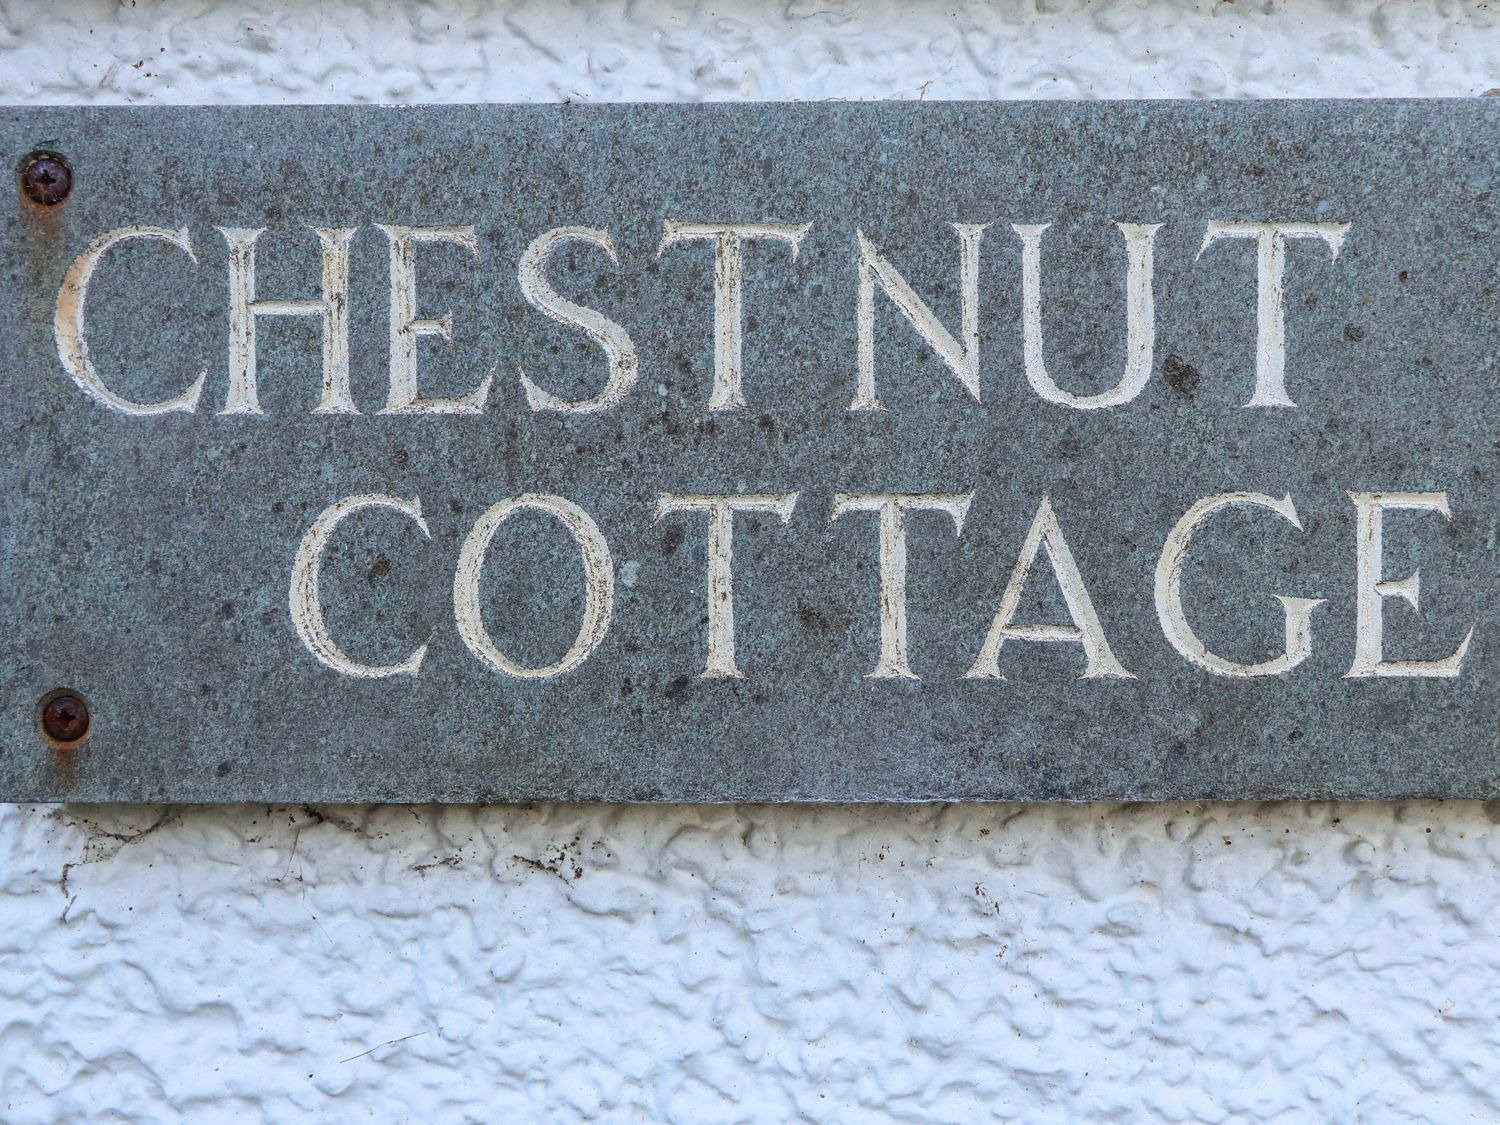 Chestnut Cottage, Lake District